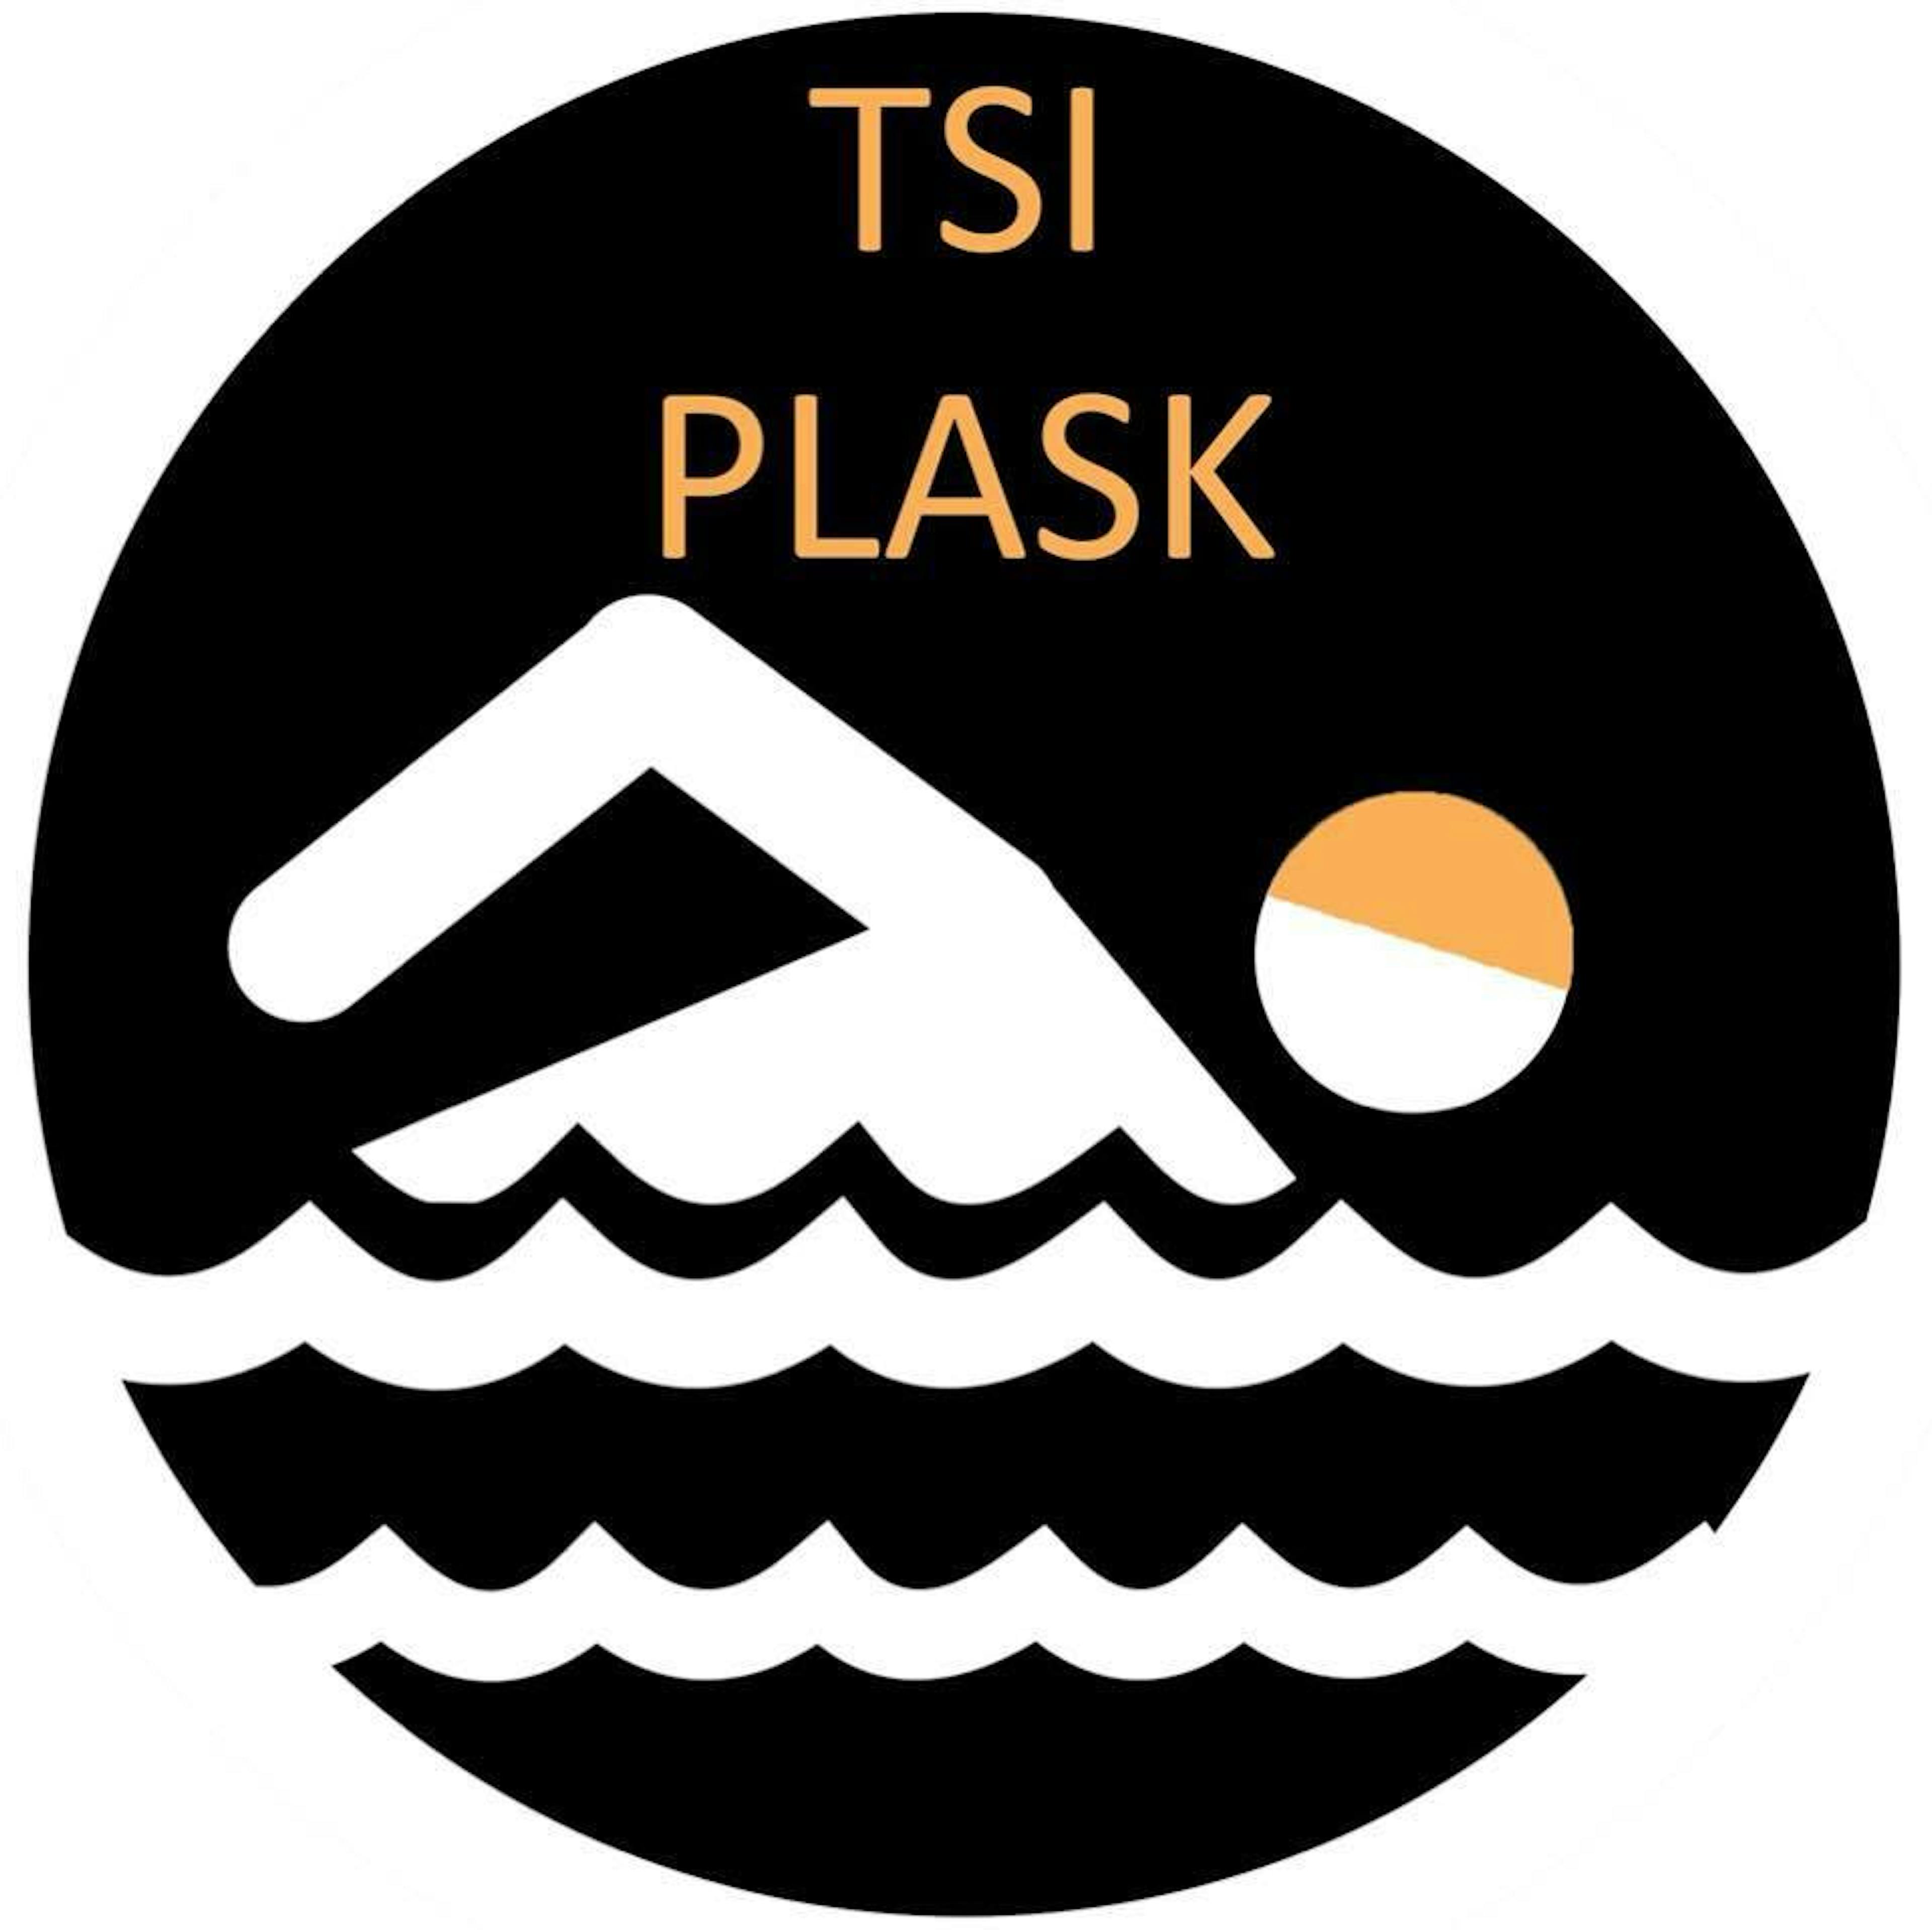 TSI Plask